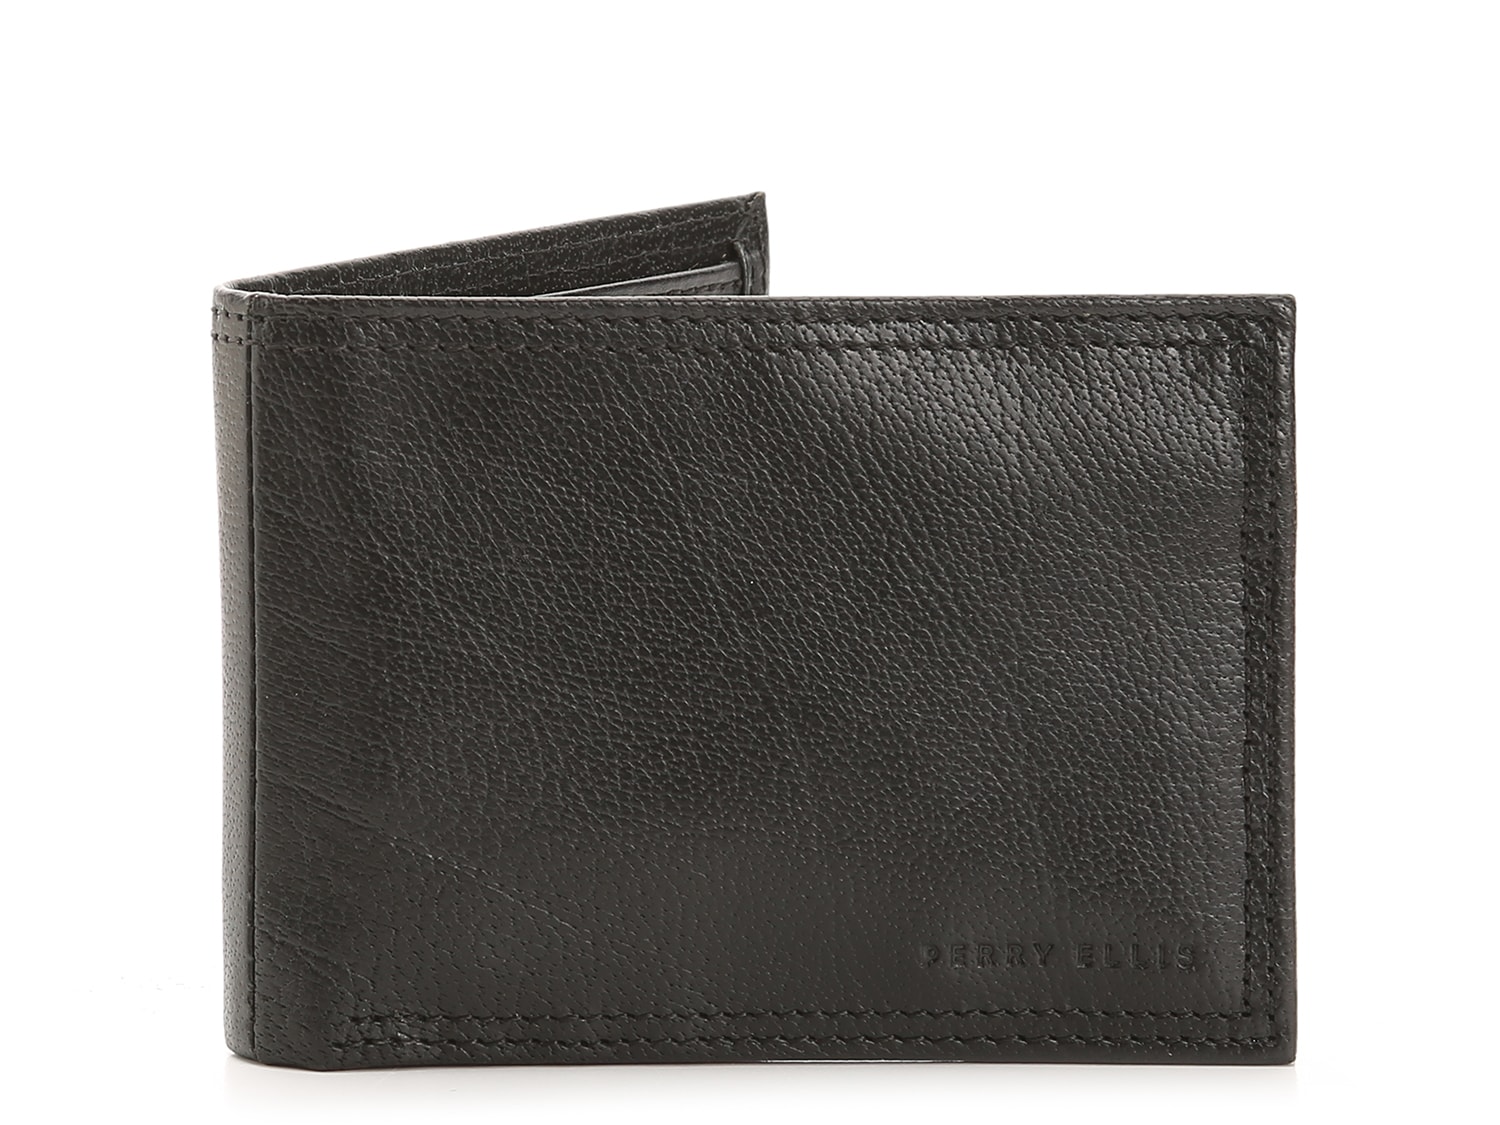 Perry Ellis Portfolio RFID Passcase Leather Wallet - Free Shipping | DSW